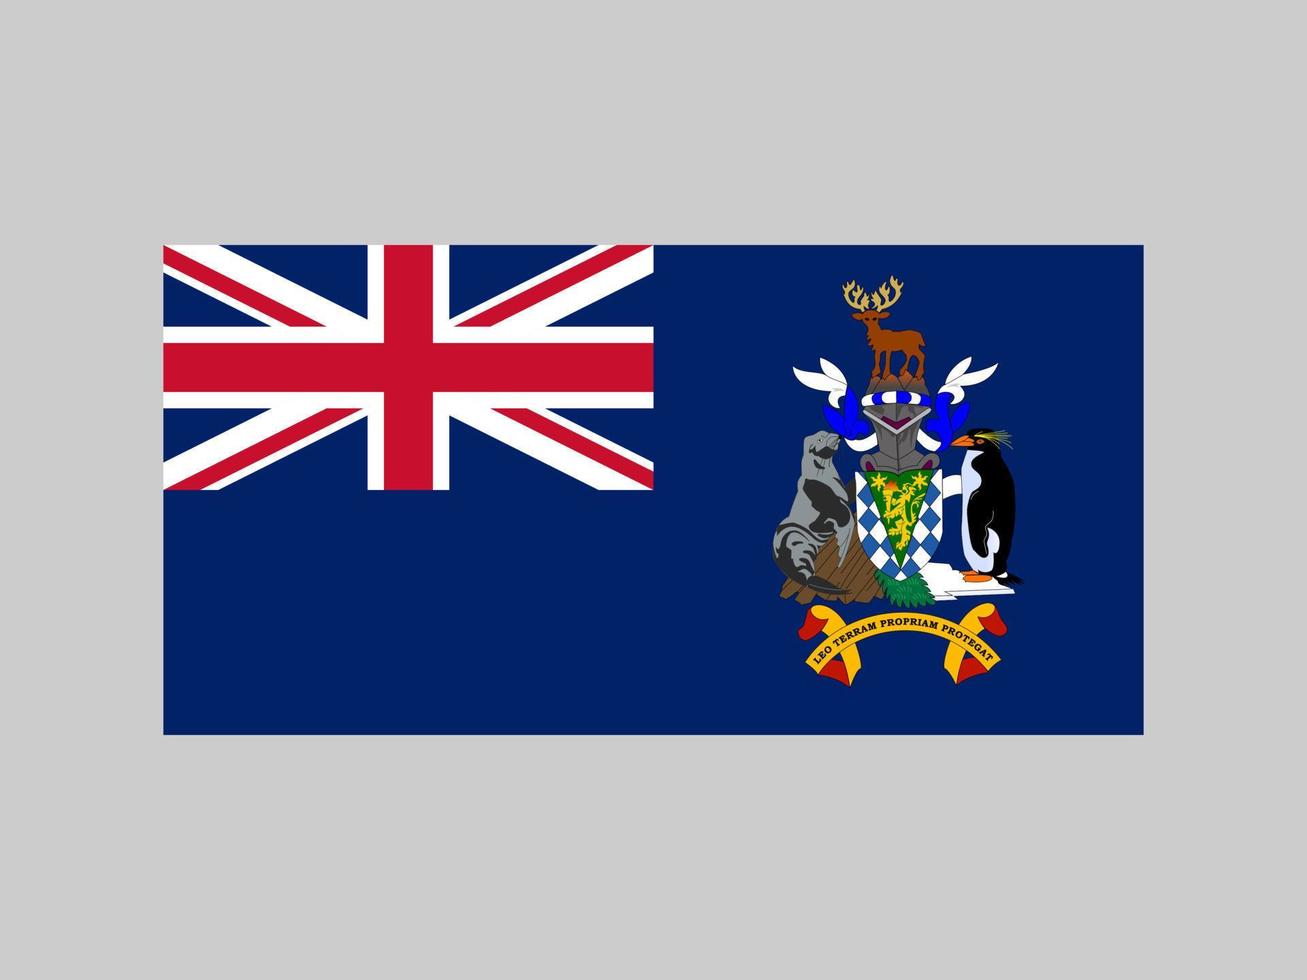 South Georgia and the South Sandwich Islands Flagge, offizielle Farben und Proportionen. Vektor-Illustration. vektor